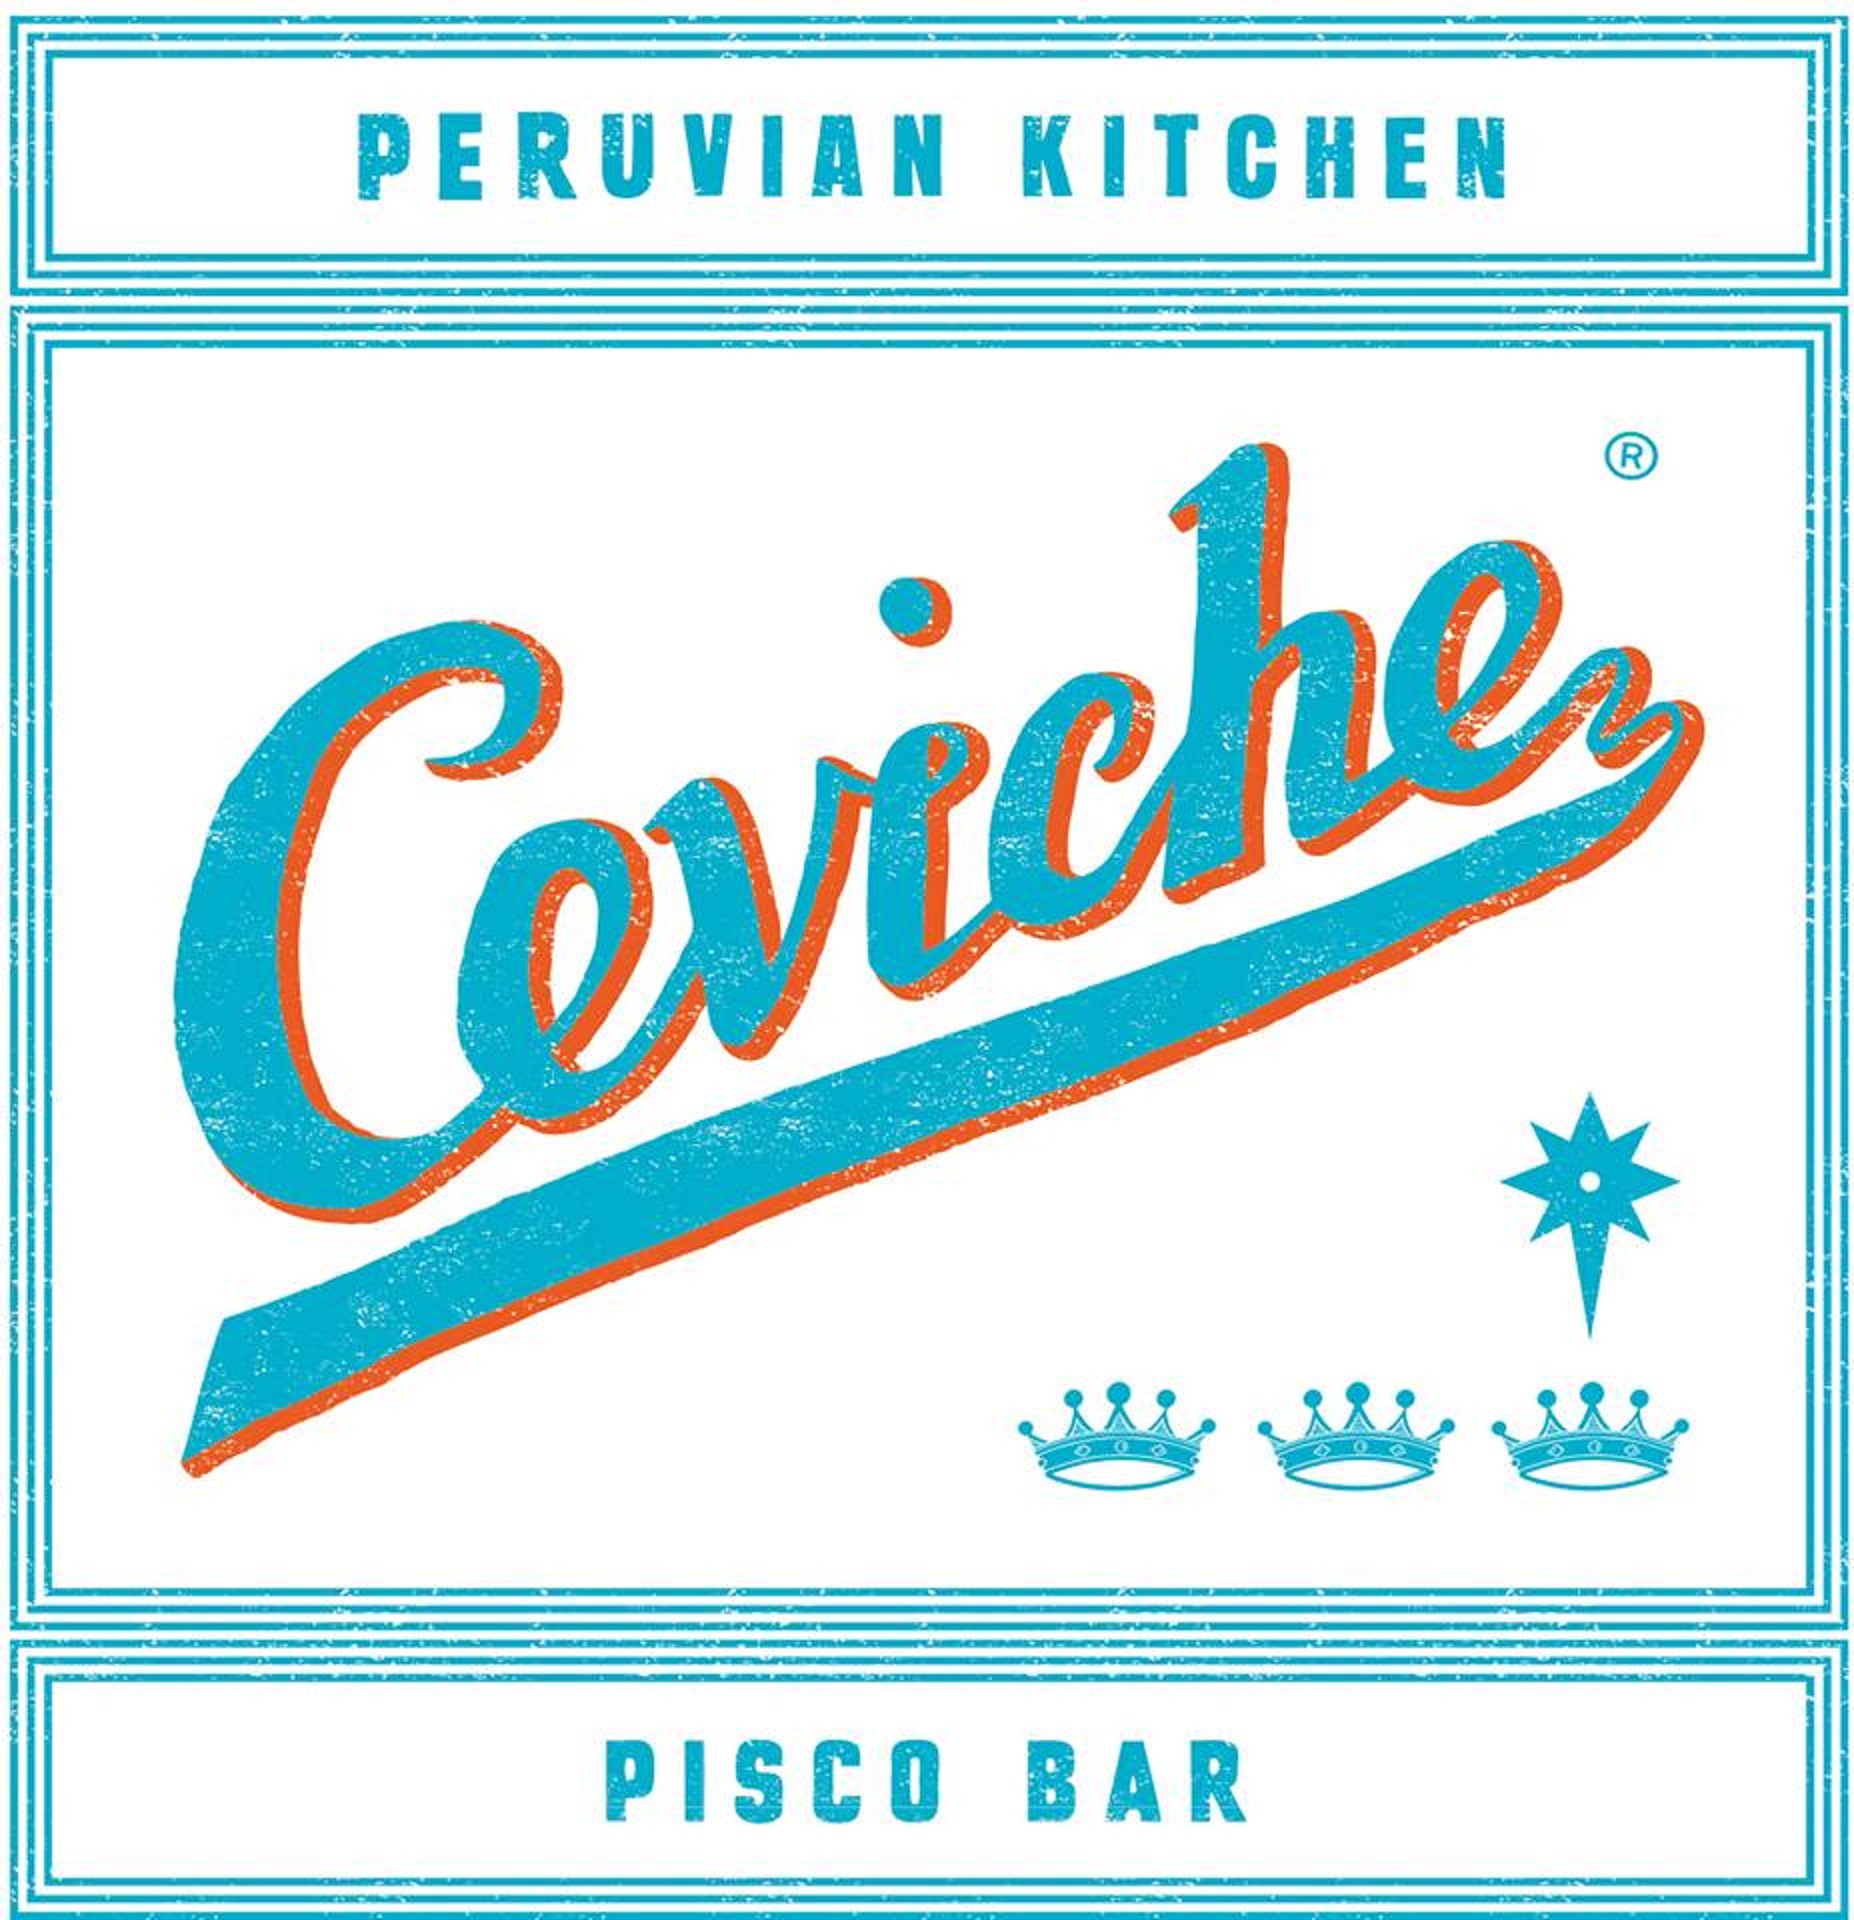 Ceviche - Soho